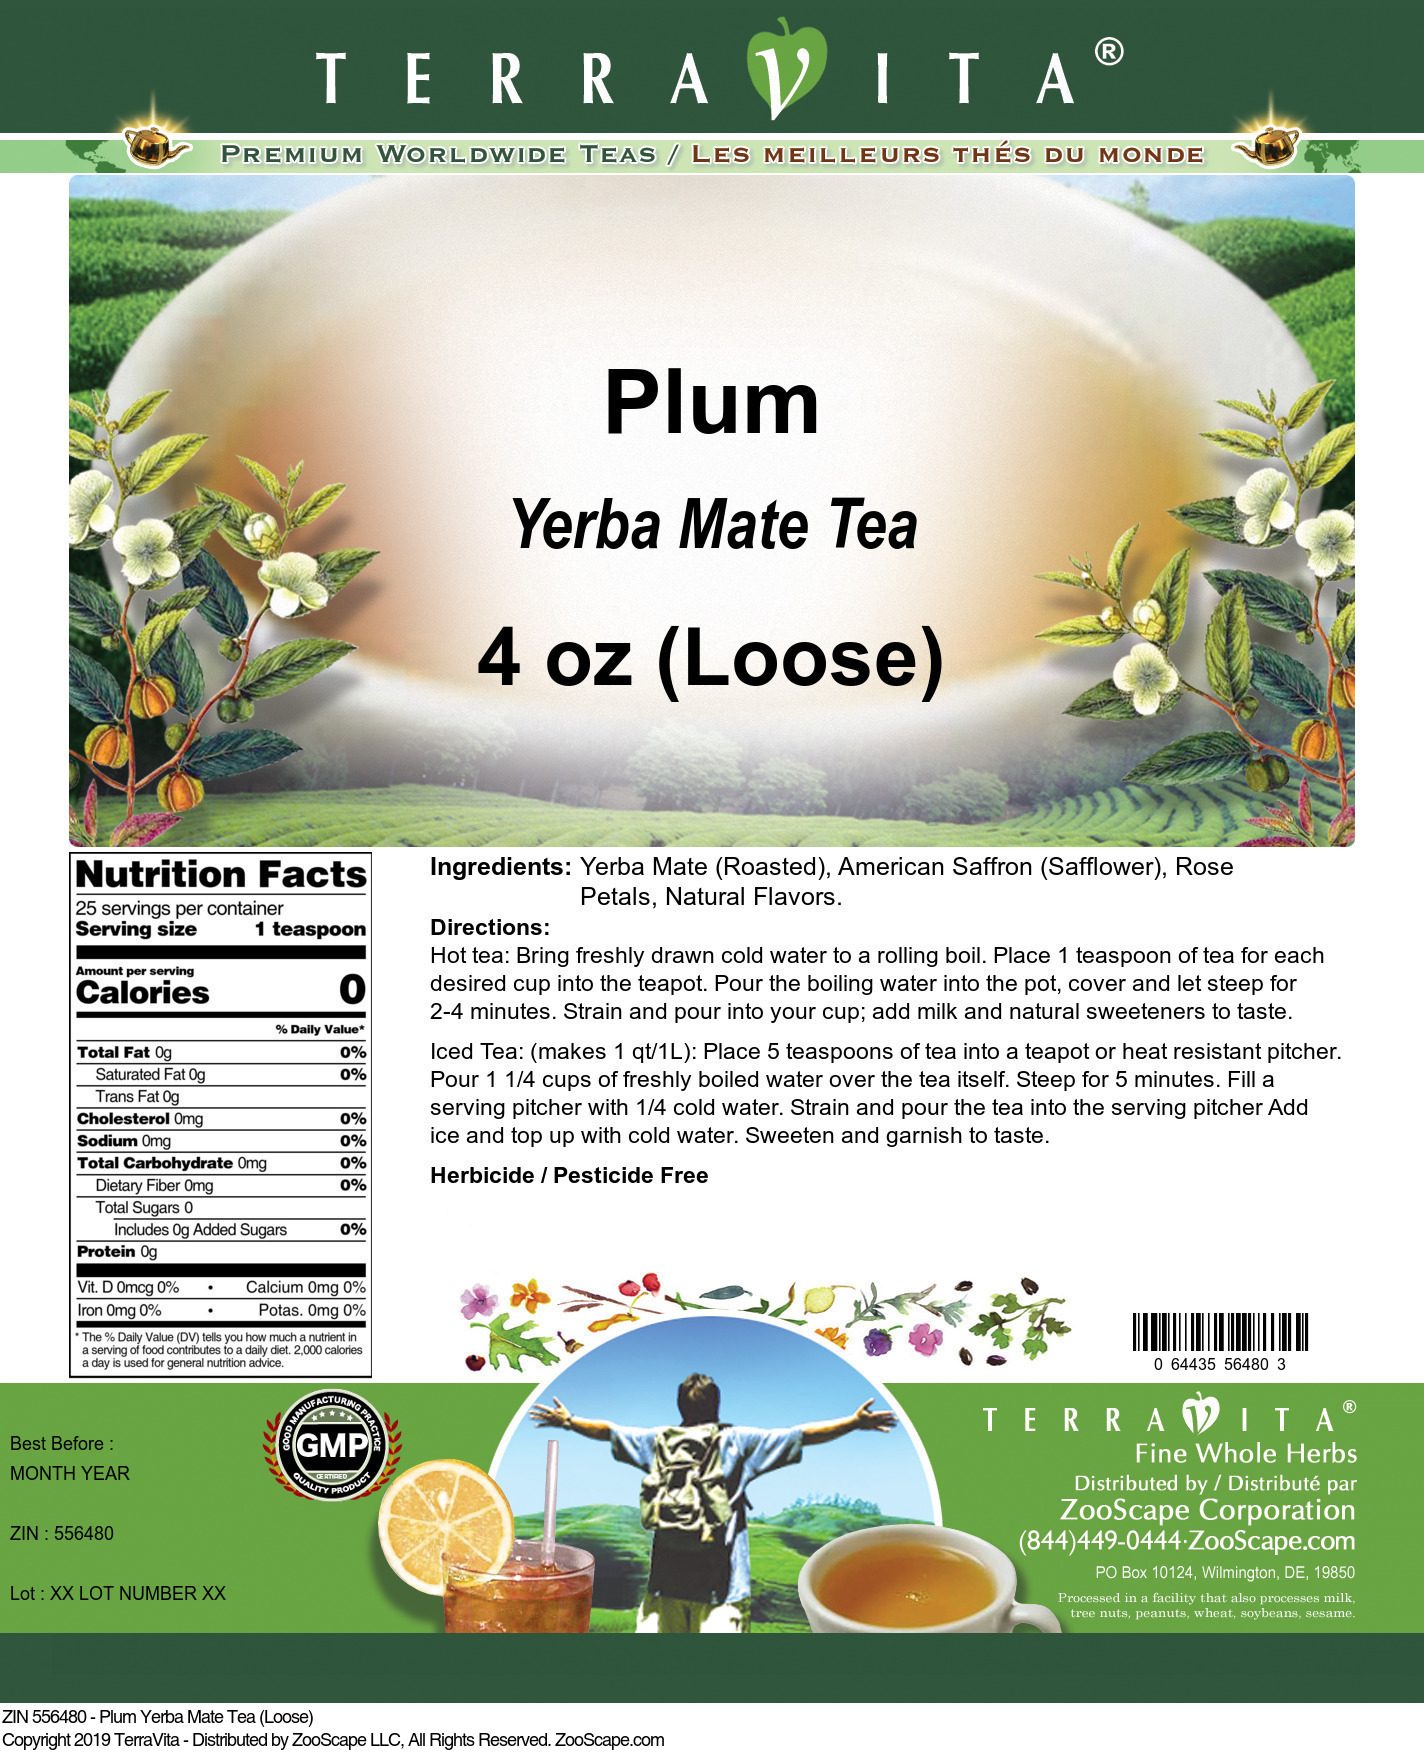 Plum Yerba Mate Tea (Loose) - Label